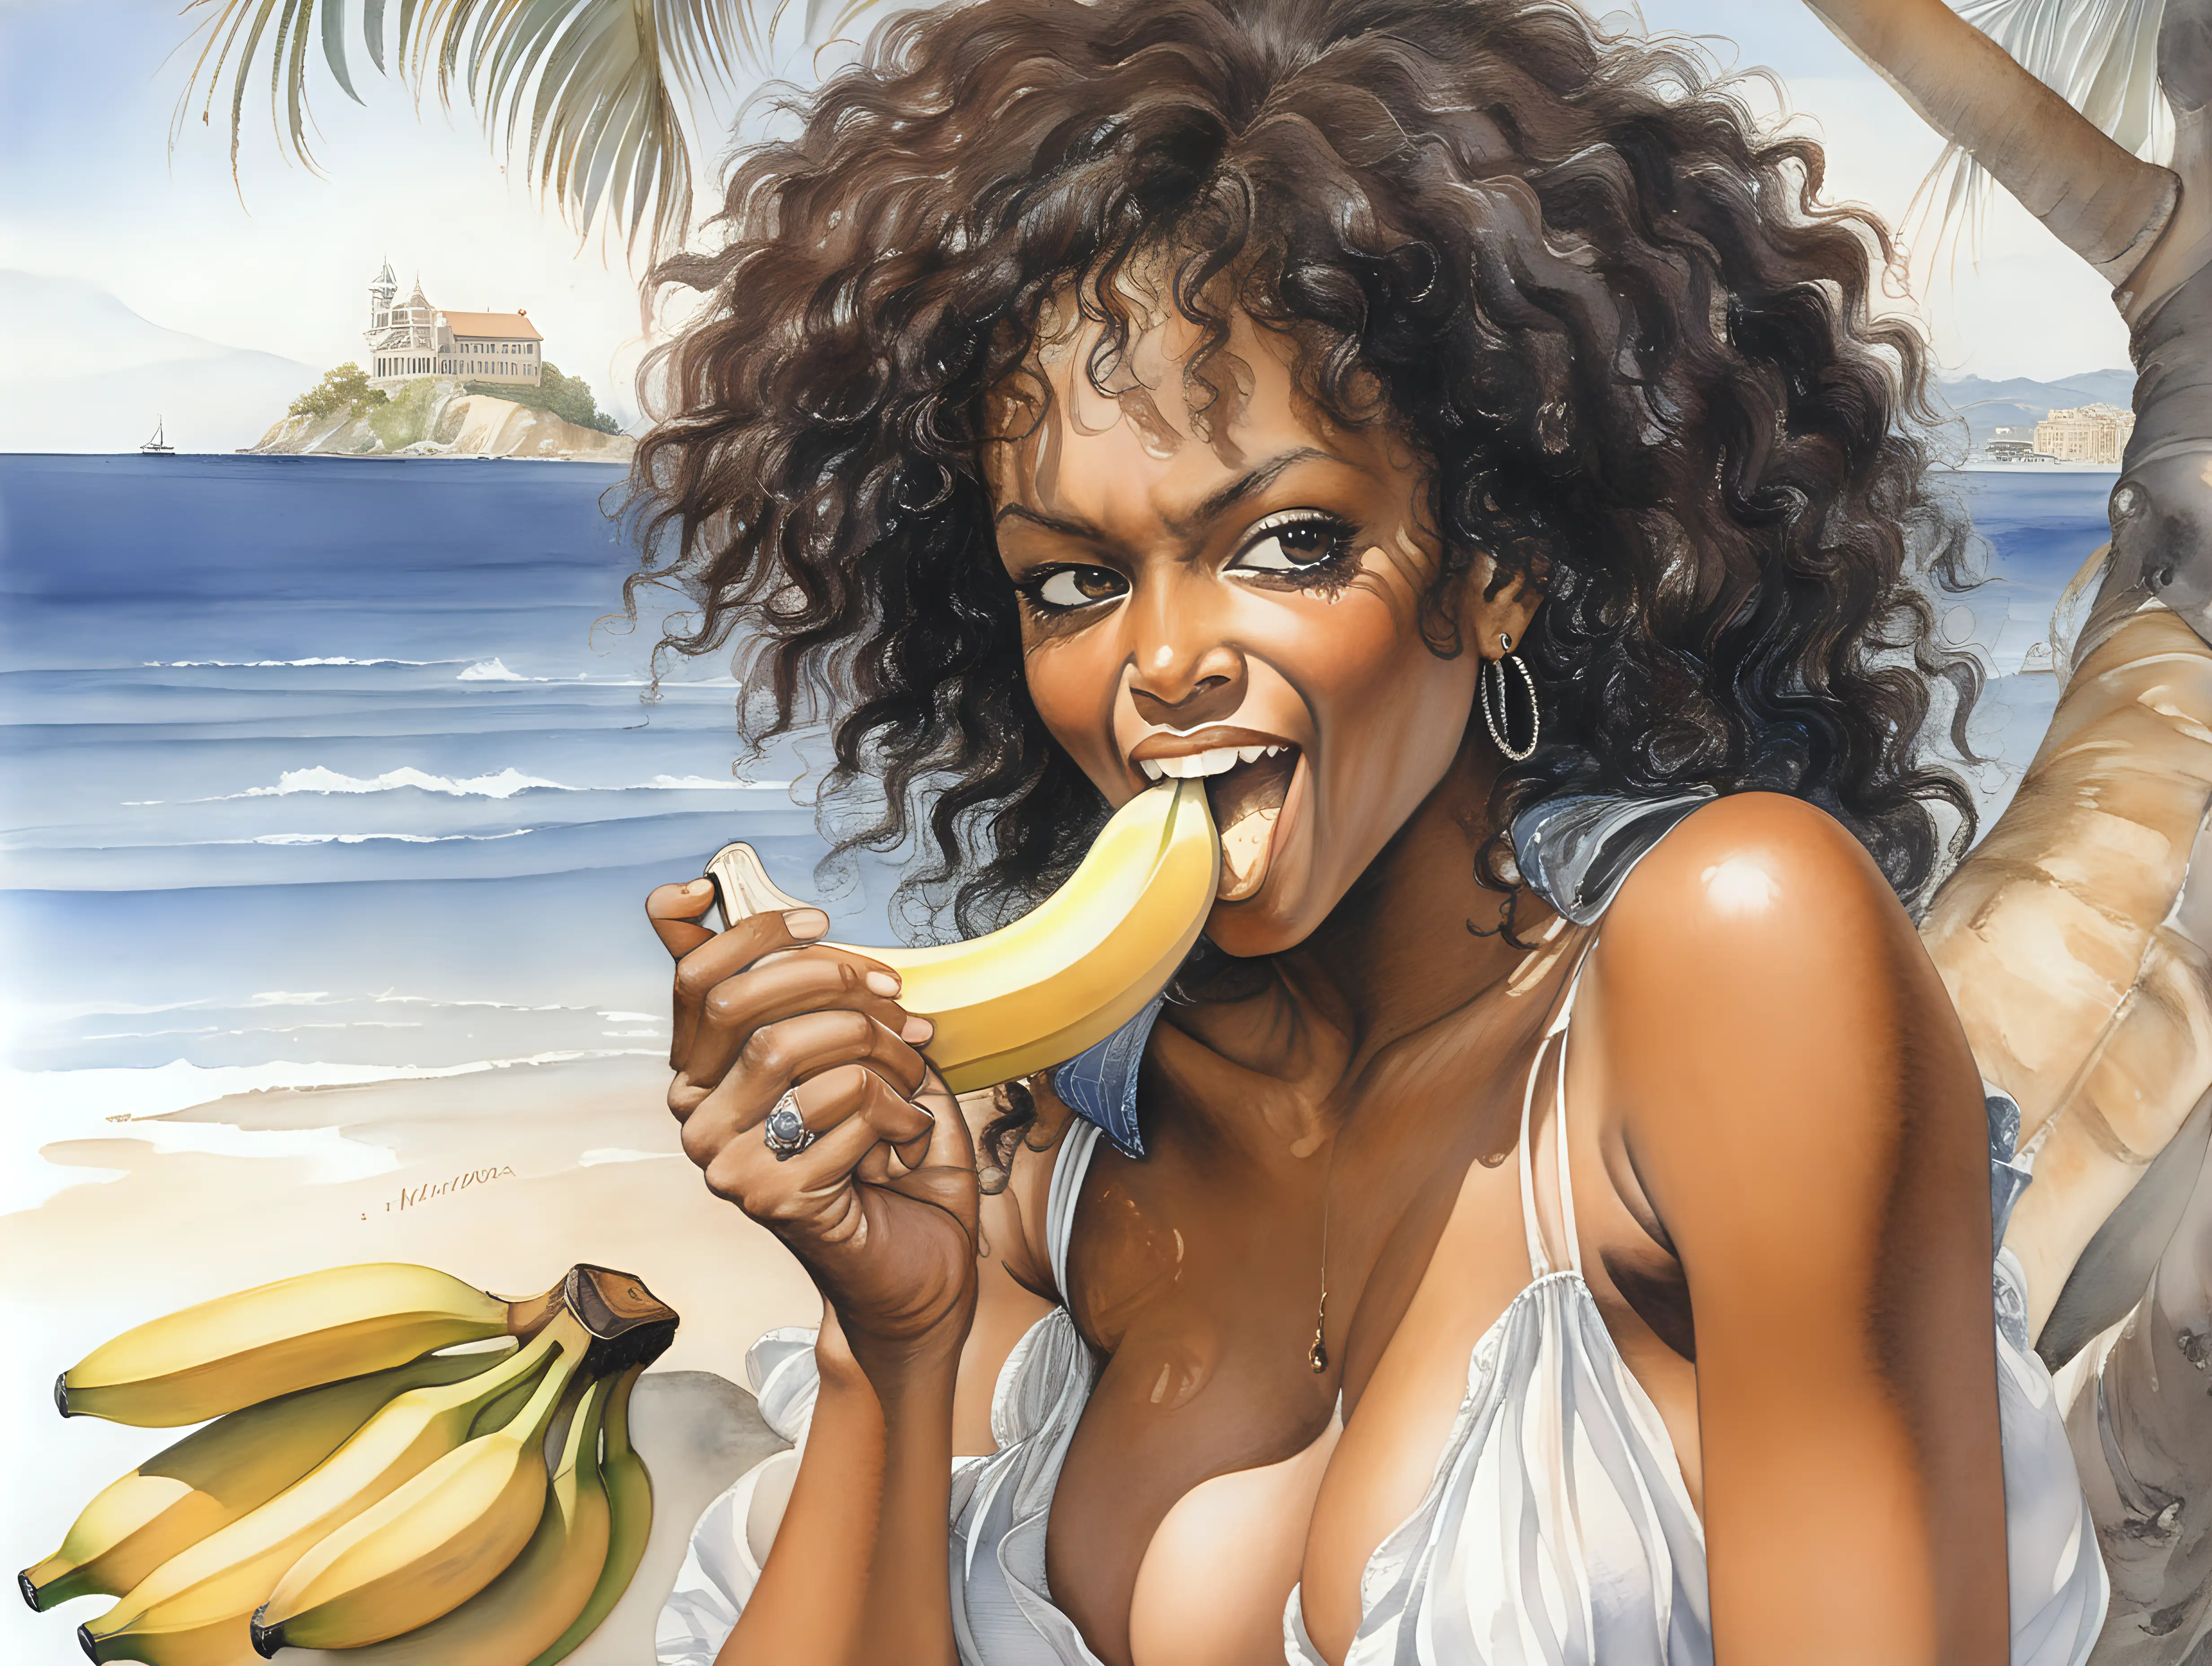 Ebony Mulatto Woman Enjoying Tropical Delight in Milo Manara Inspired Watercolor